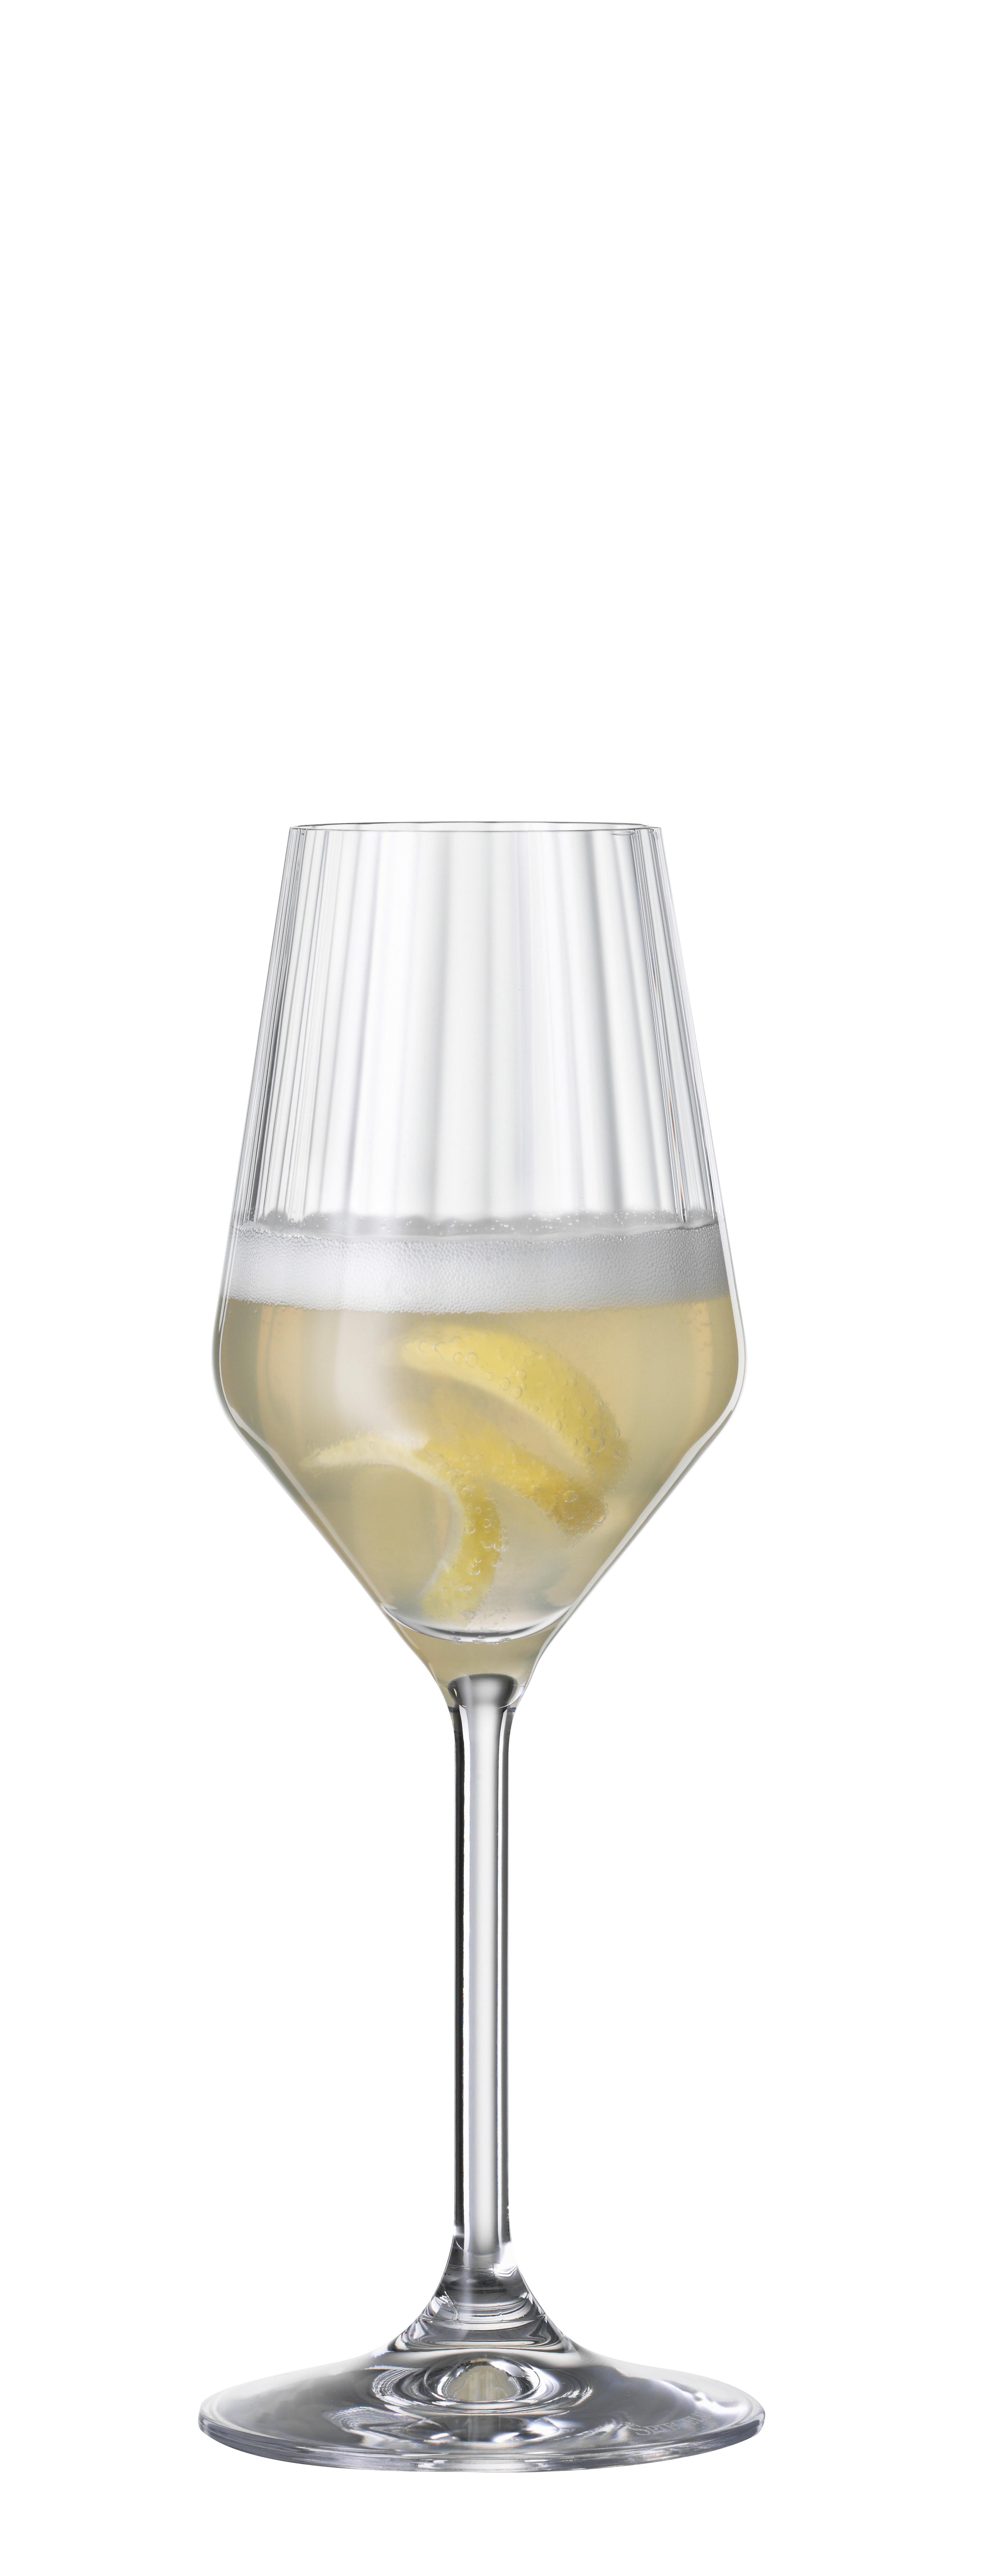 Champagnerglas Lifestyle, 4-teilig - Klar, MODERN, Glas (8,0/8,0/22,3cm) - Spiegelau